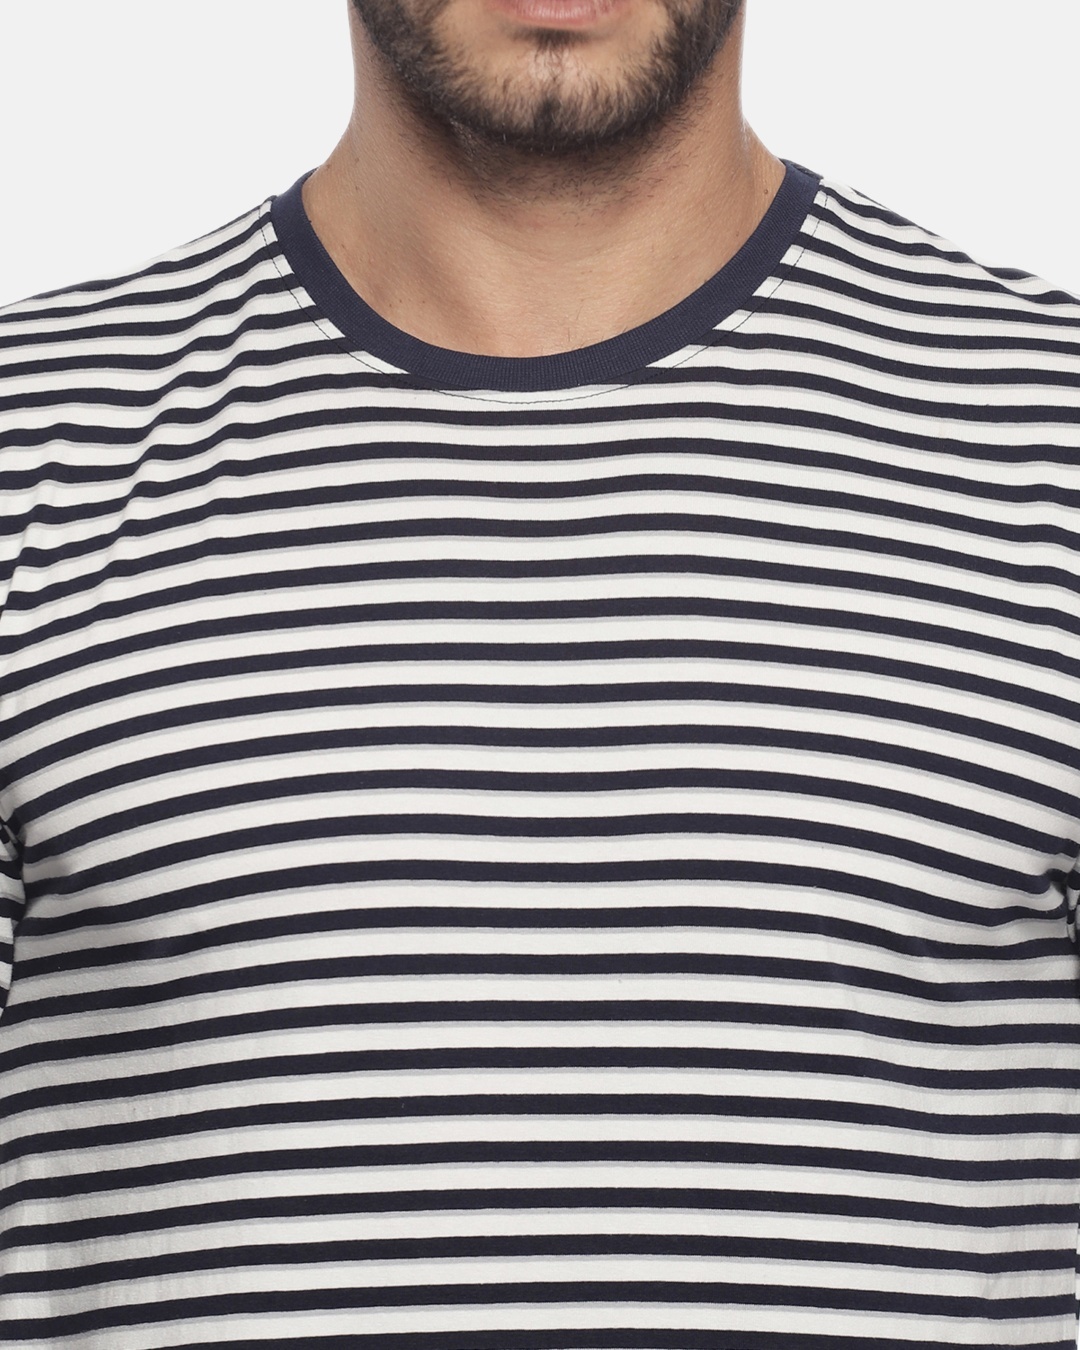 Shop Men's Blue & White Striped T-shirt